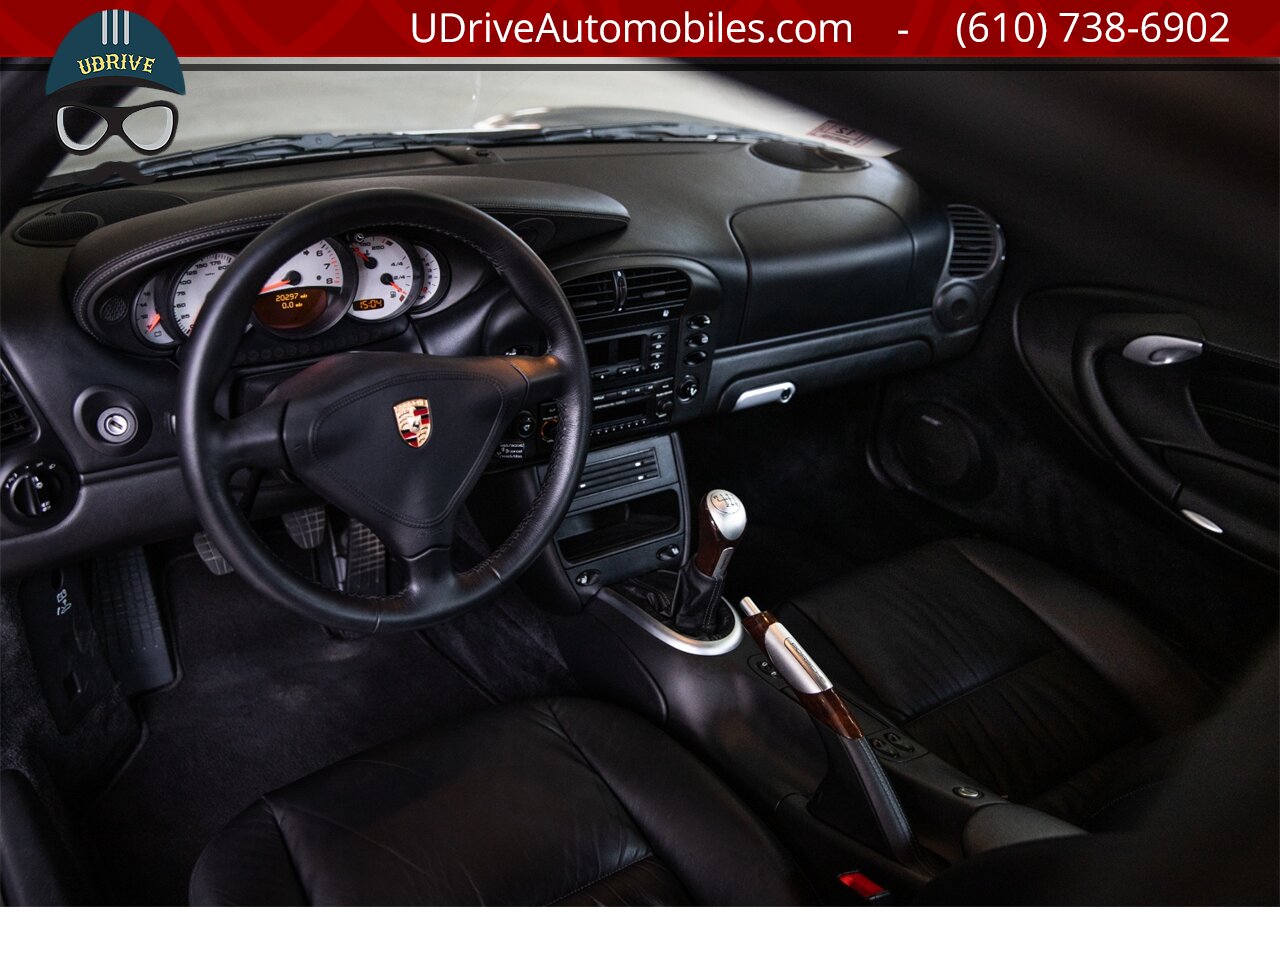 2003 Porsche 911 996 Turbo 6 Speed X50 Power Pkg 1 Owner 20k Miles  Black Full Leather Interior - Photo 6 - West Chester, PA 19382